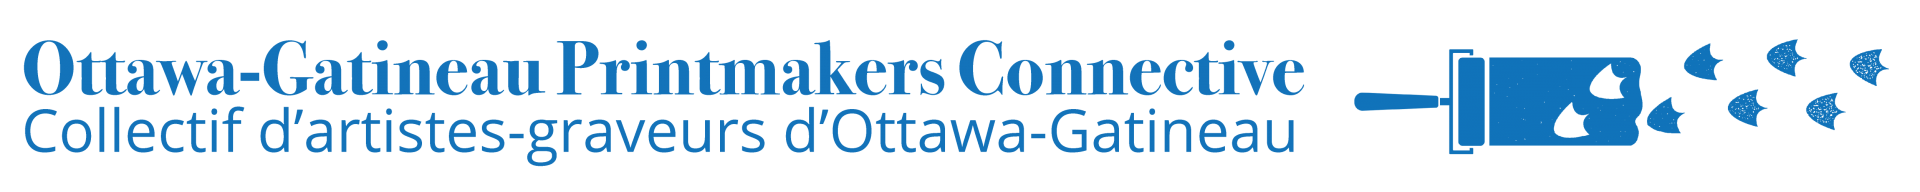 Ottawa-Gatineau Printmakers Connective